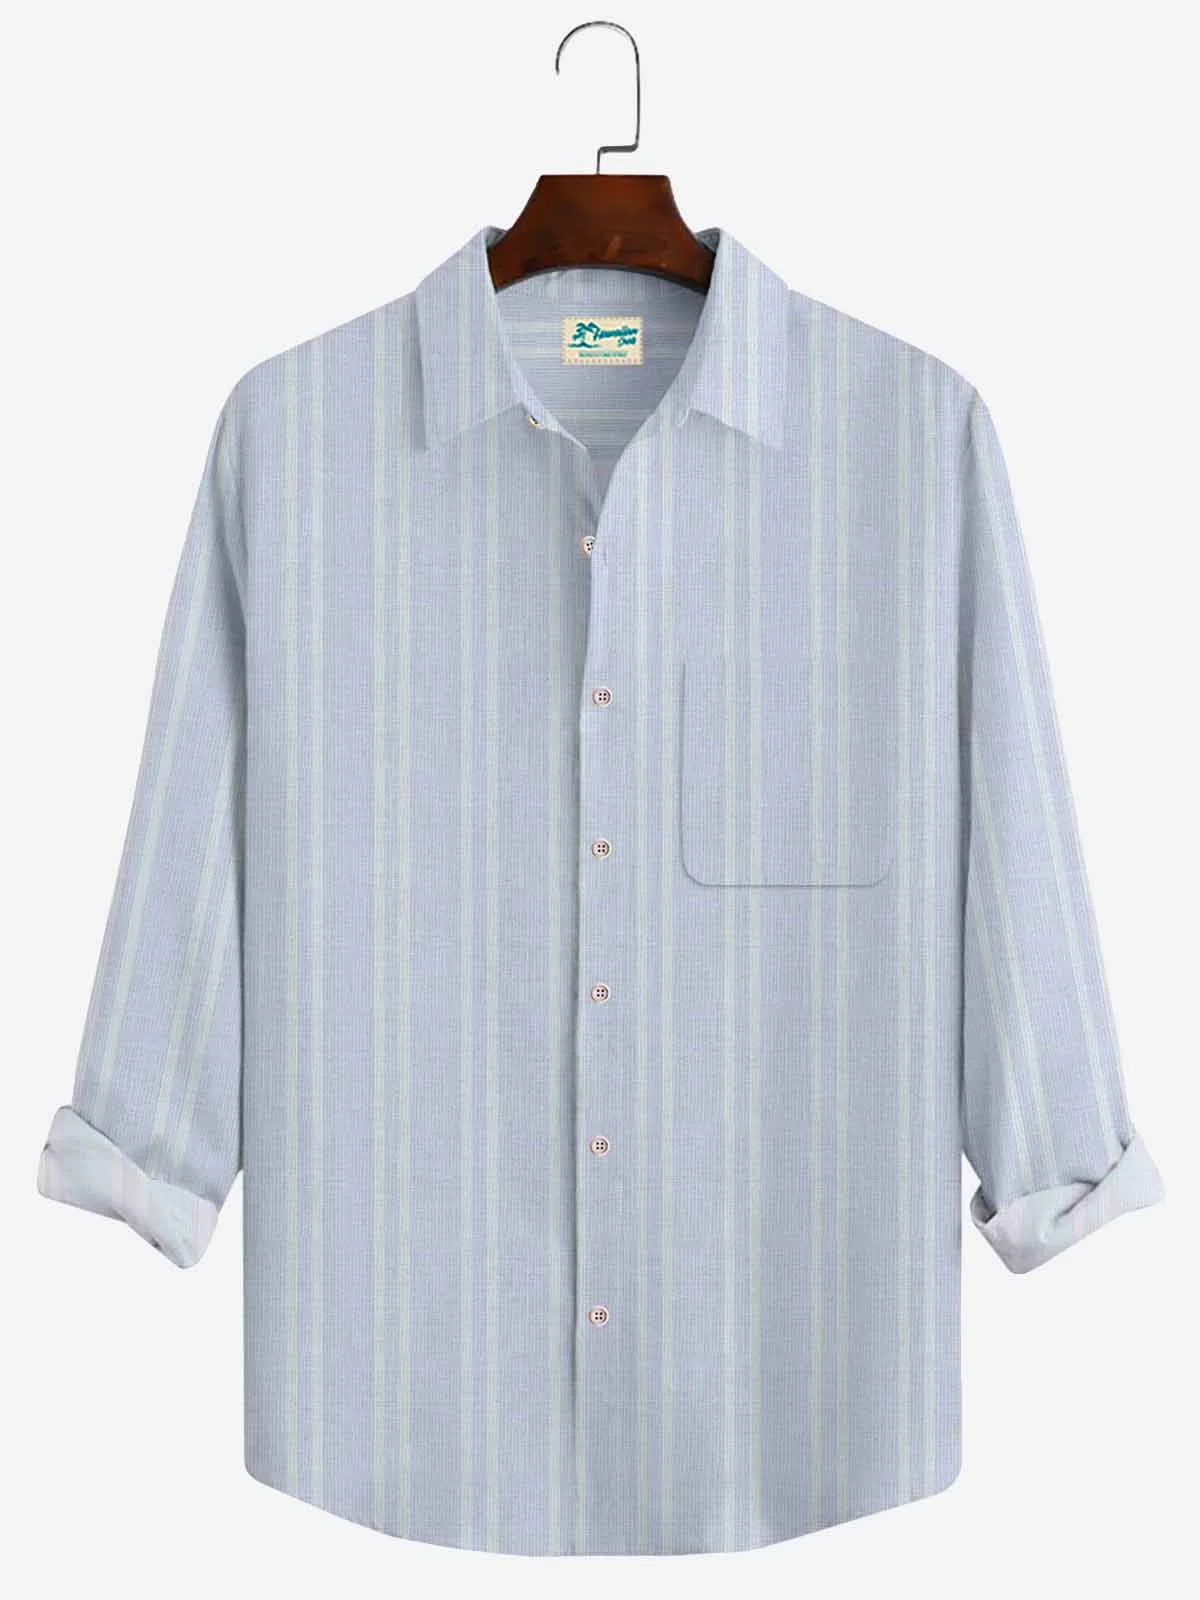 Royaura Holiday Beach Casual Blend Light Blue Men's Long Sleeve Striped Shirts Stretch Plus SIze Camp Pocket Shirts